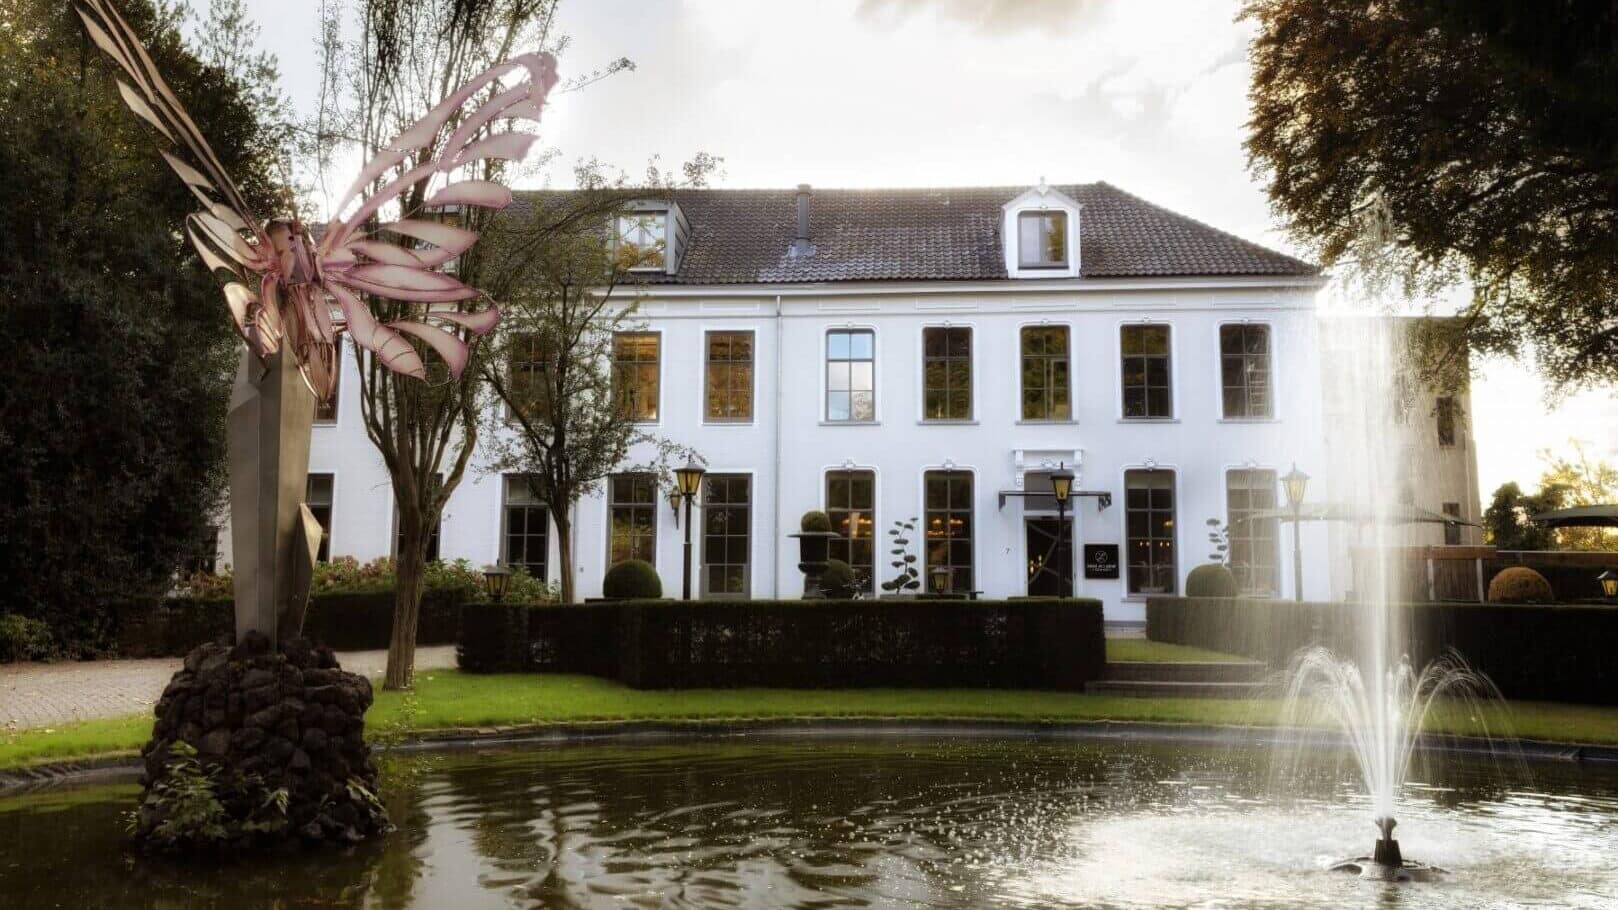 Hotel de Leijhof Oisterwijk -  - Nederland